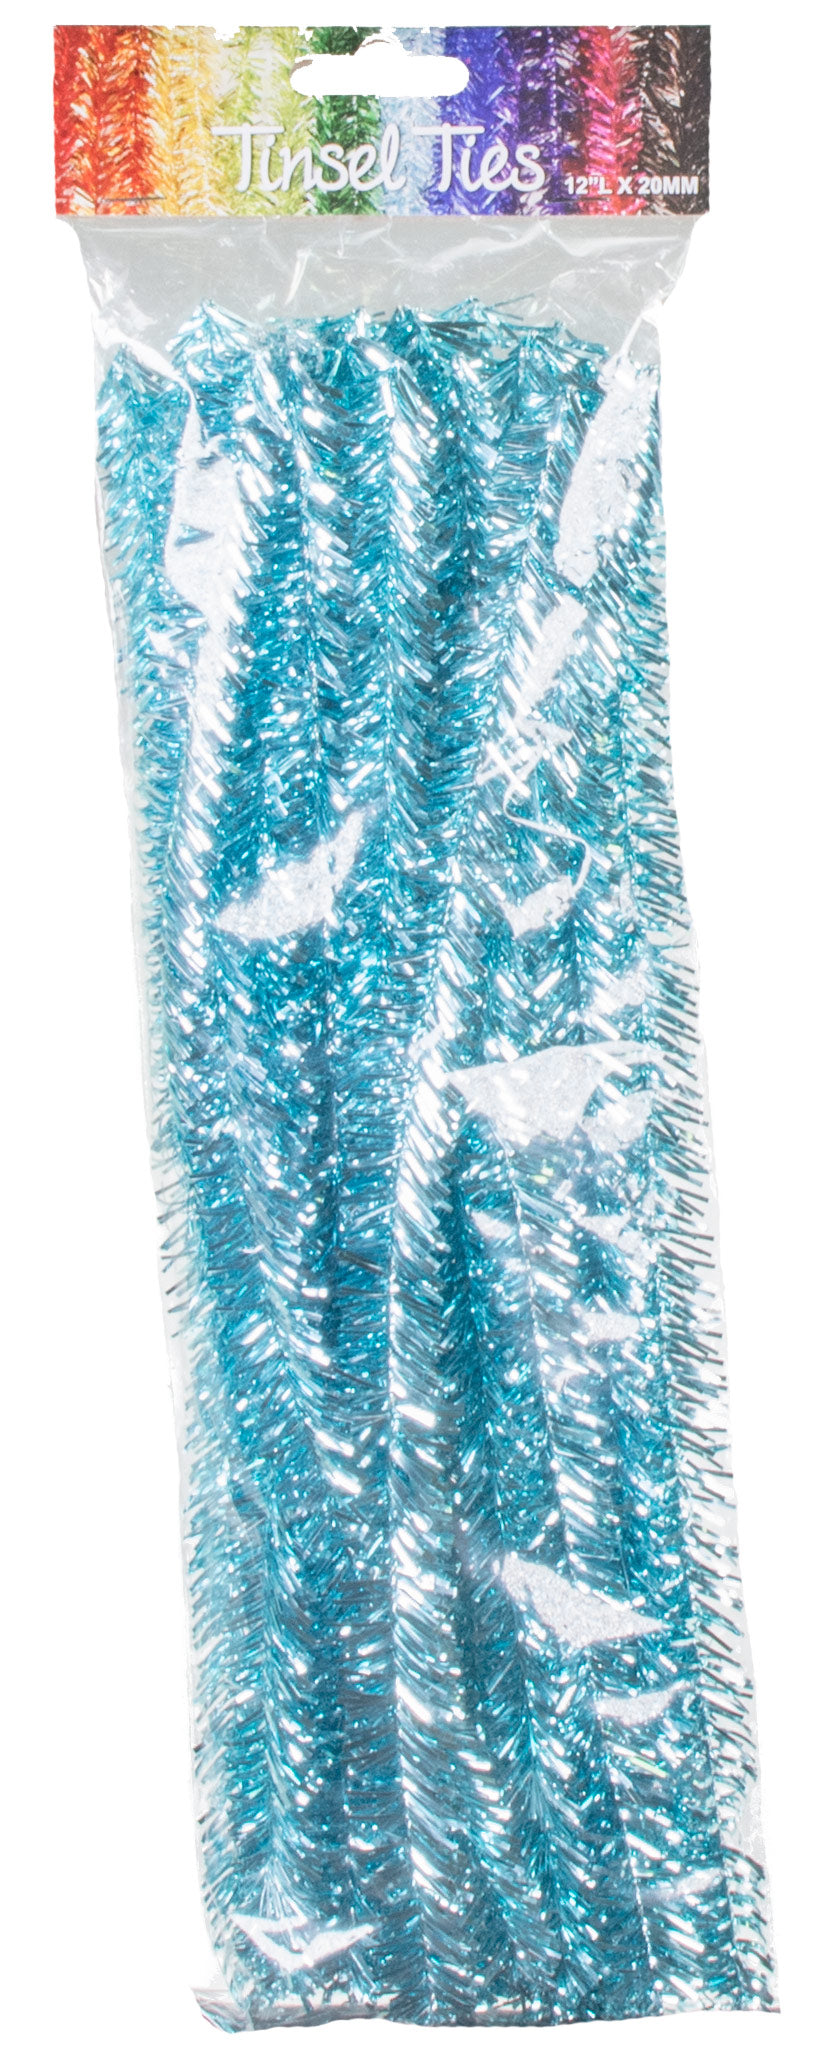 20mm Tinsel Tie Stems: Metallic Turquoise (25)